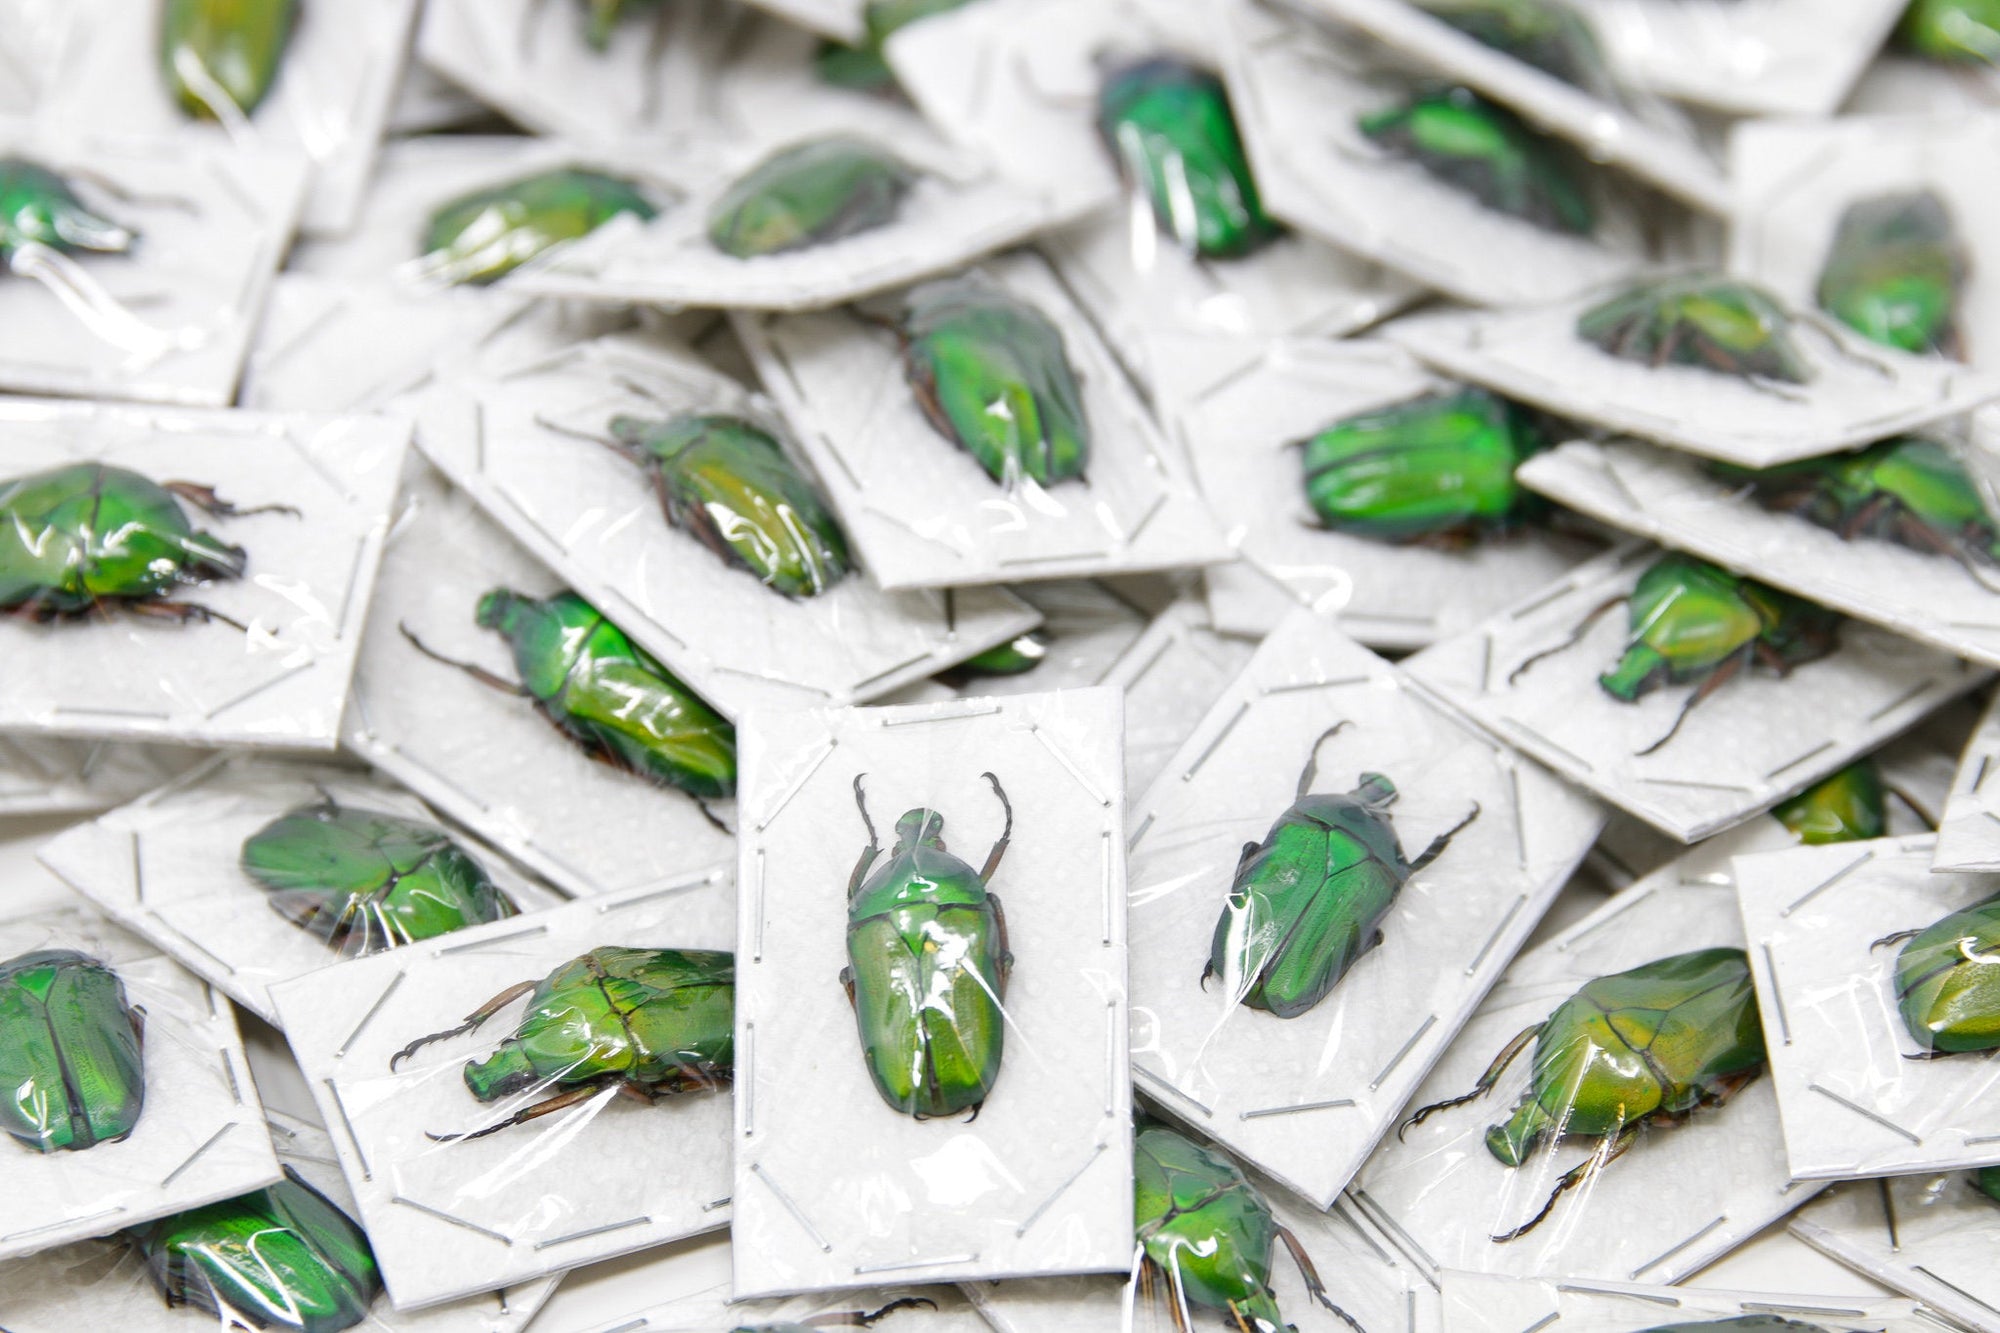 2 x Euchloropus laetus | Green Flower Beetles | A1 Unmounted Specimens